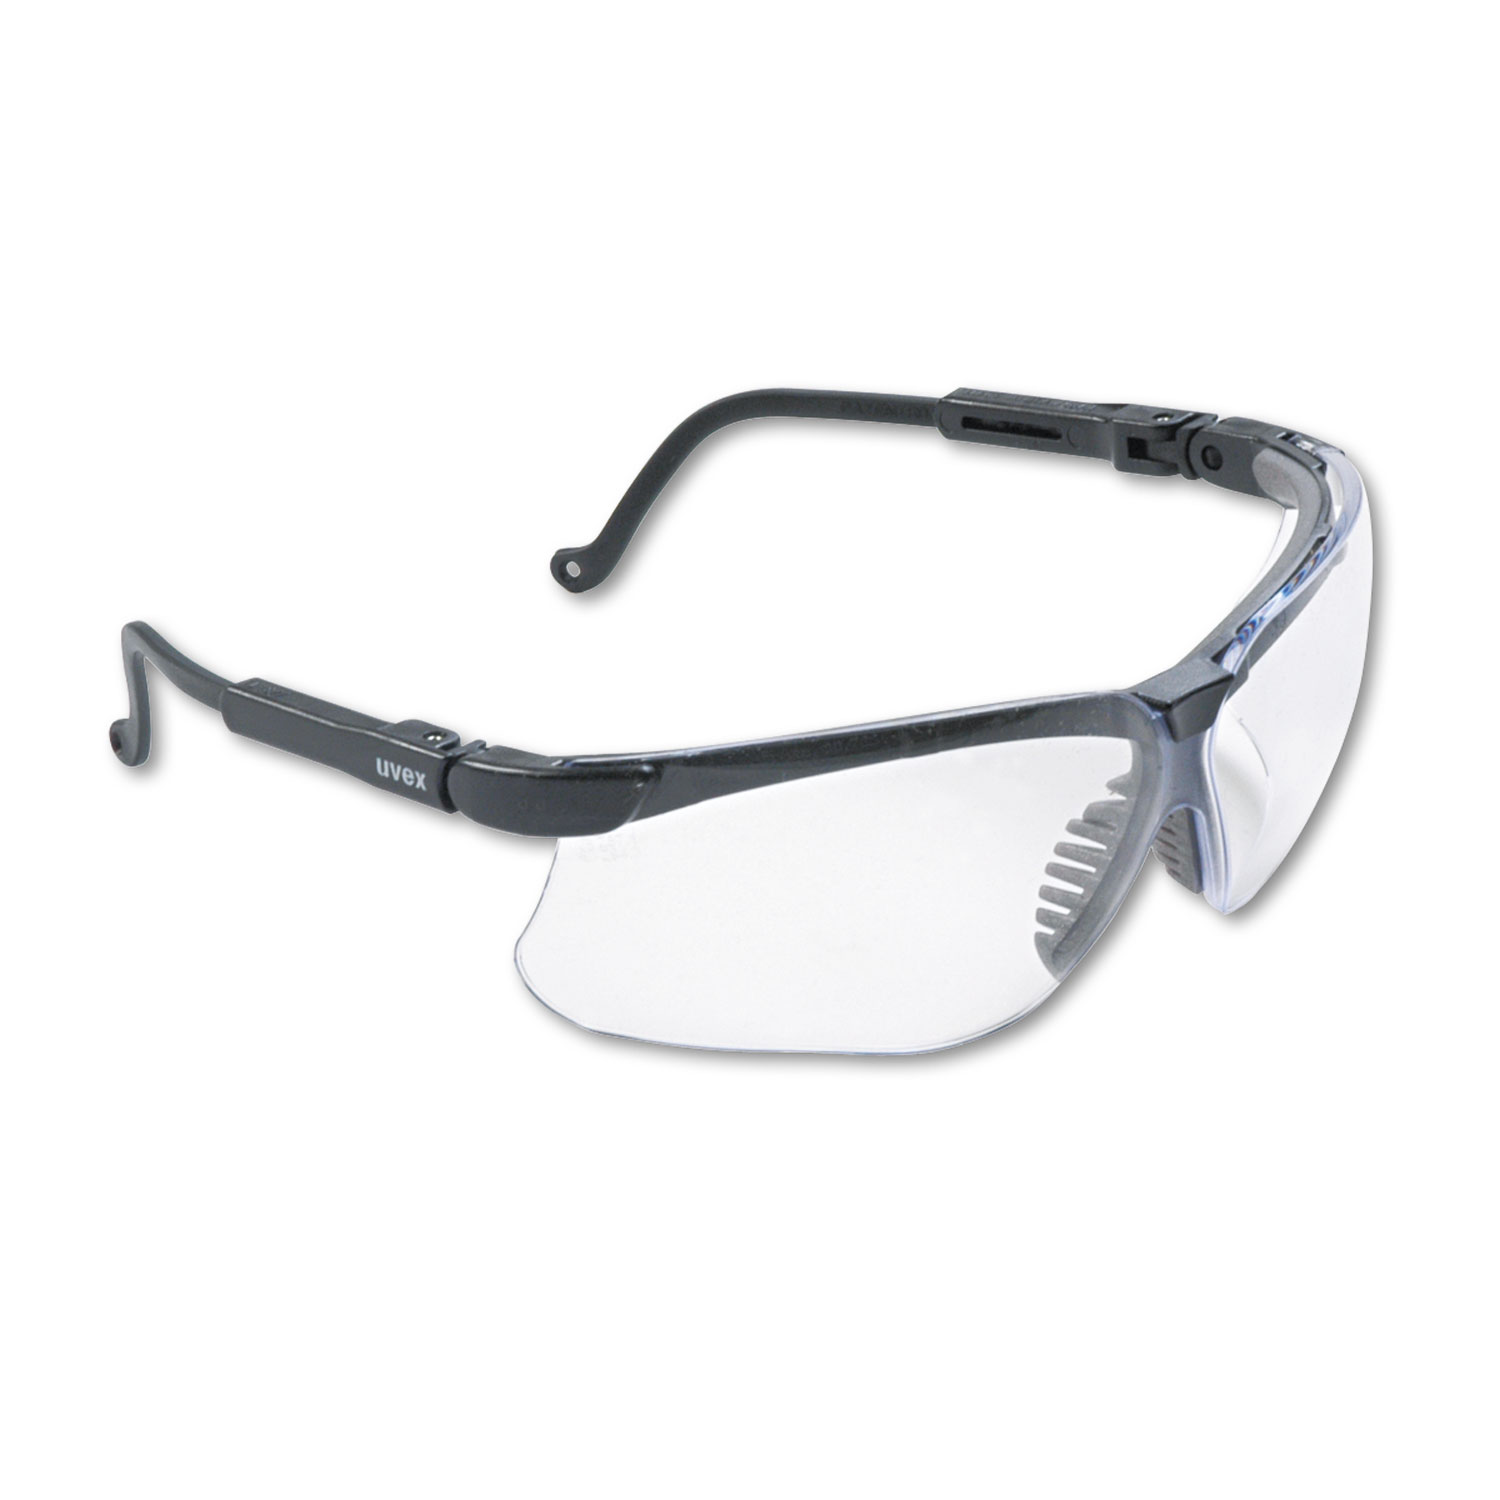  Honeywell Uvex S3200 Genesis Wraparound Safety Glasses, Black Plastic Frame, Clear Lens (UVXS3200) 